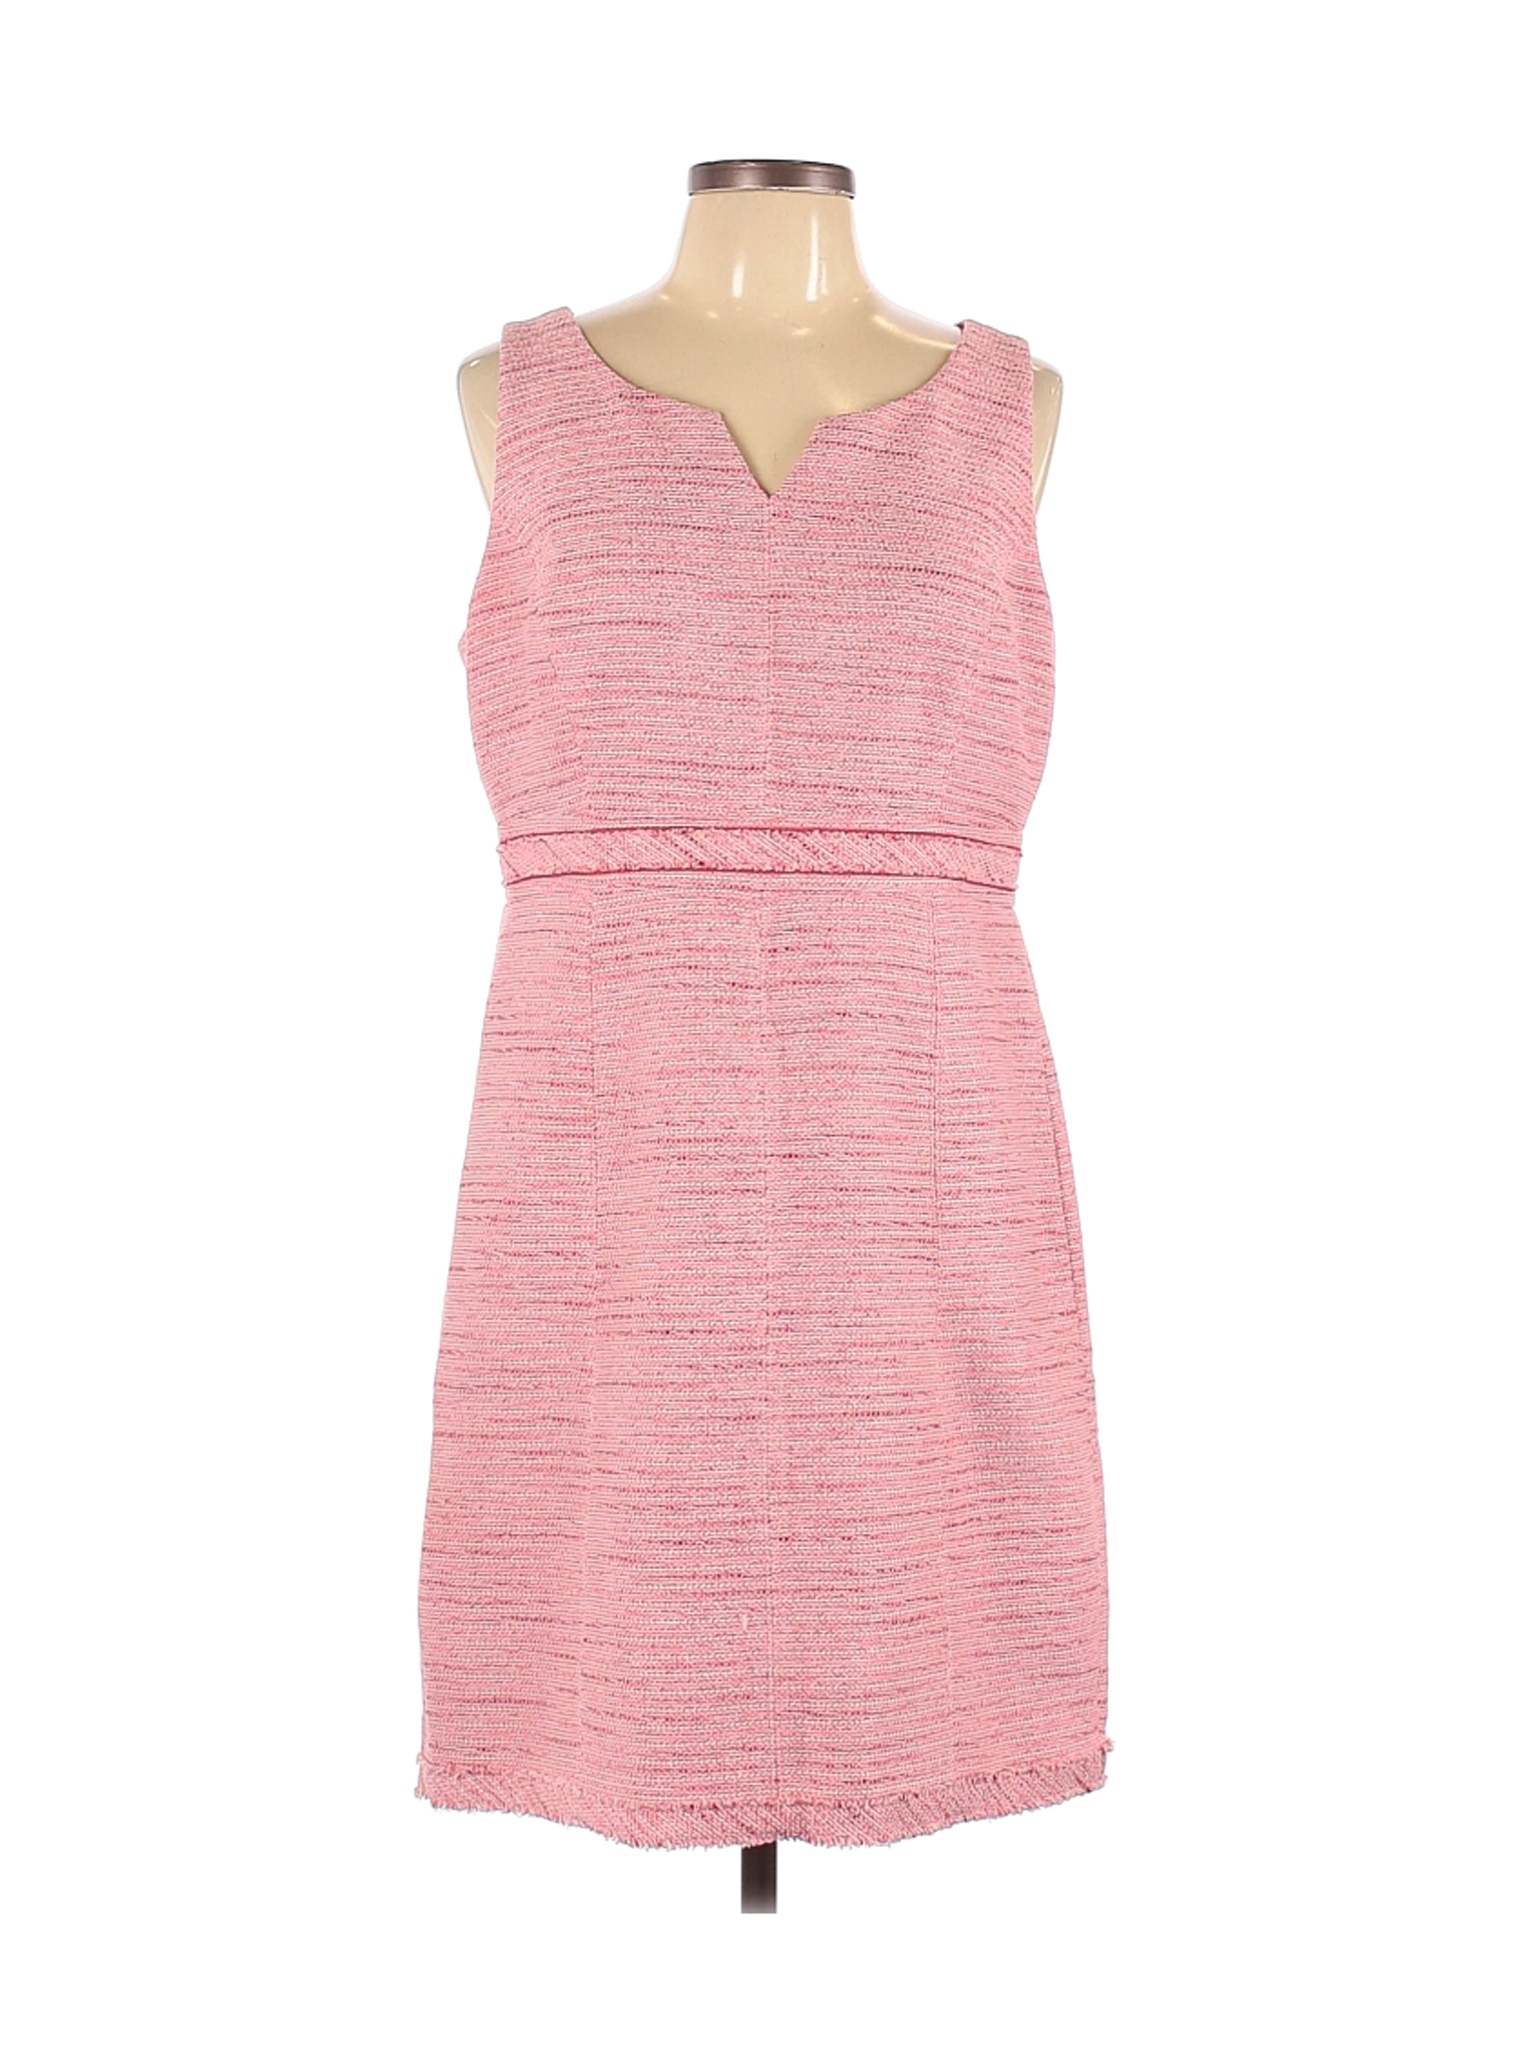 White House Black Market Women Pink Casual Dress 12 | eBay